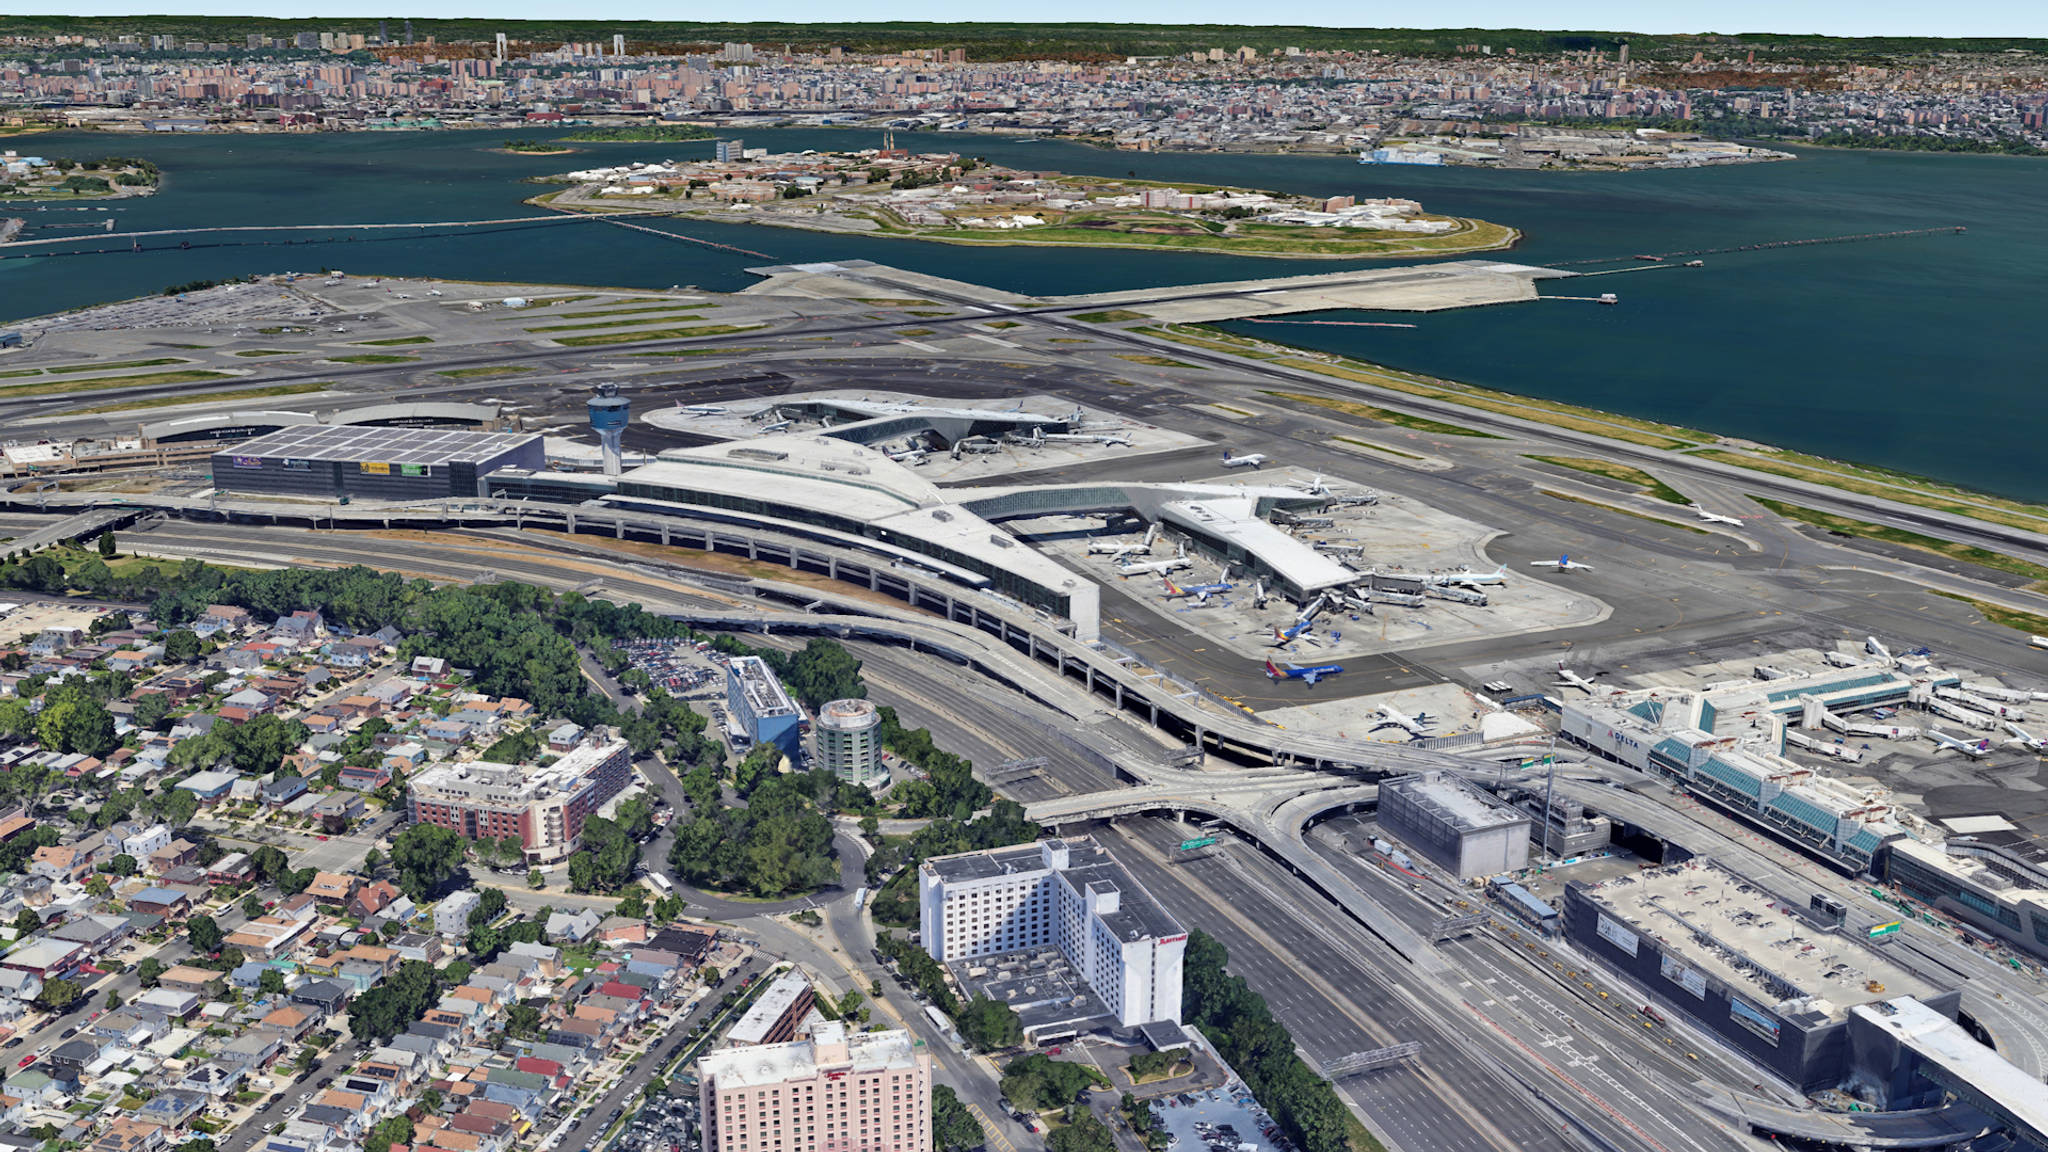  Aerial View of LaGuardia Airport Parking